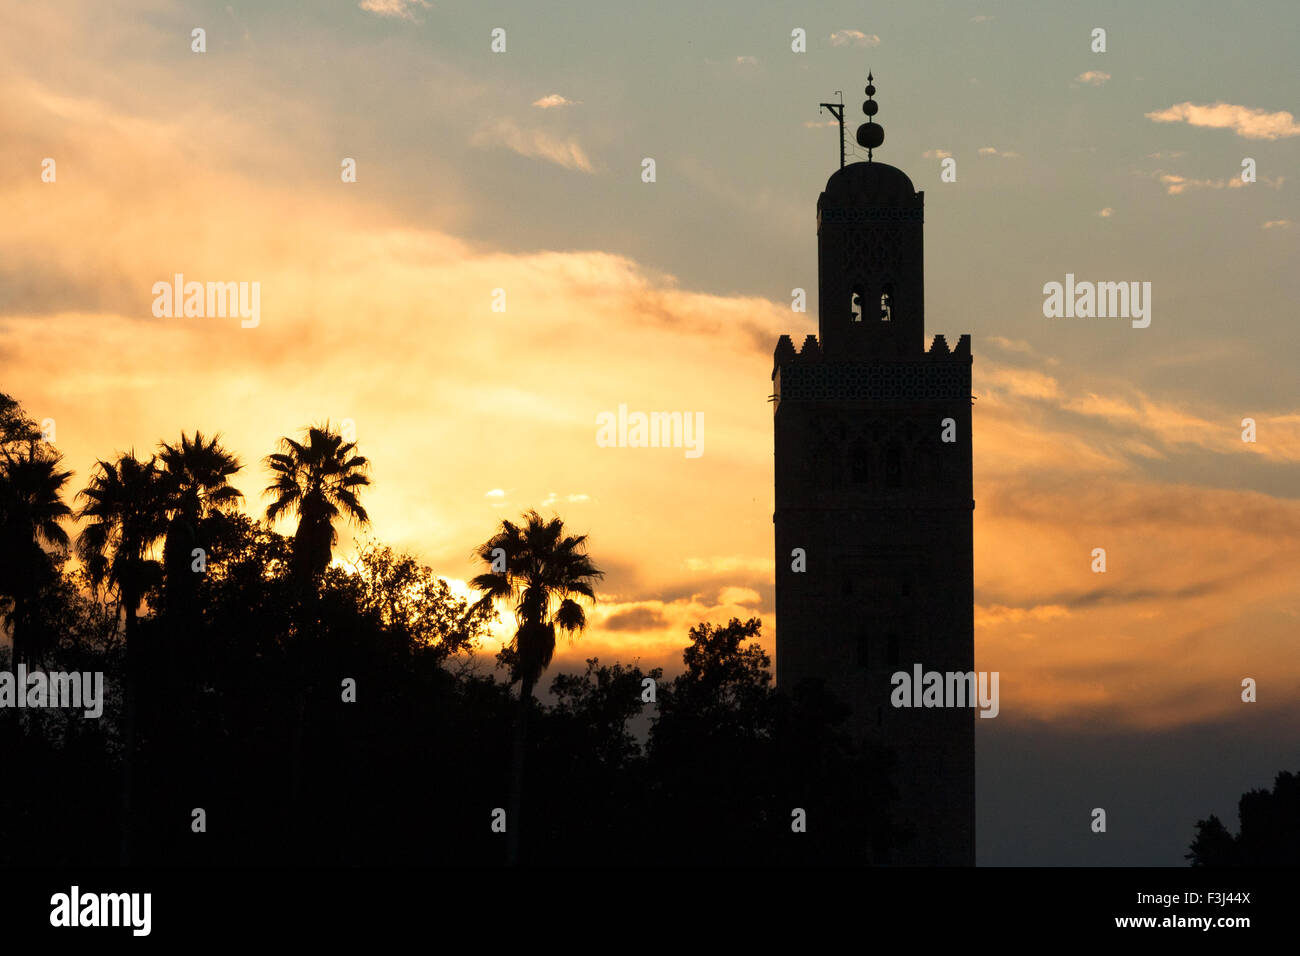 La moschea di Koutoubia al tramonto, Marrakech, Marocco Foto Stock